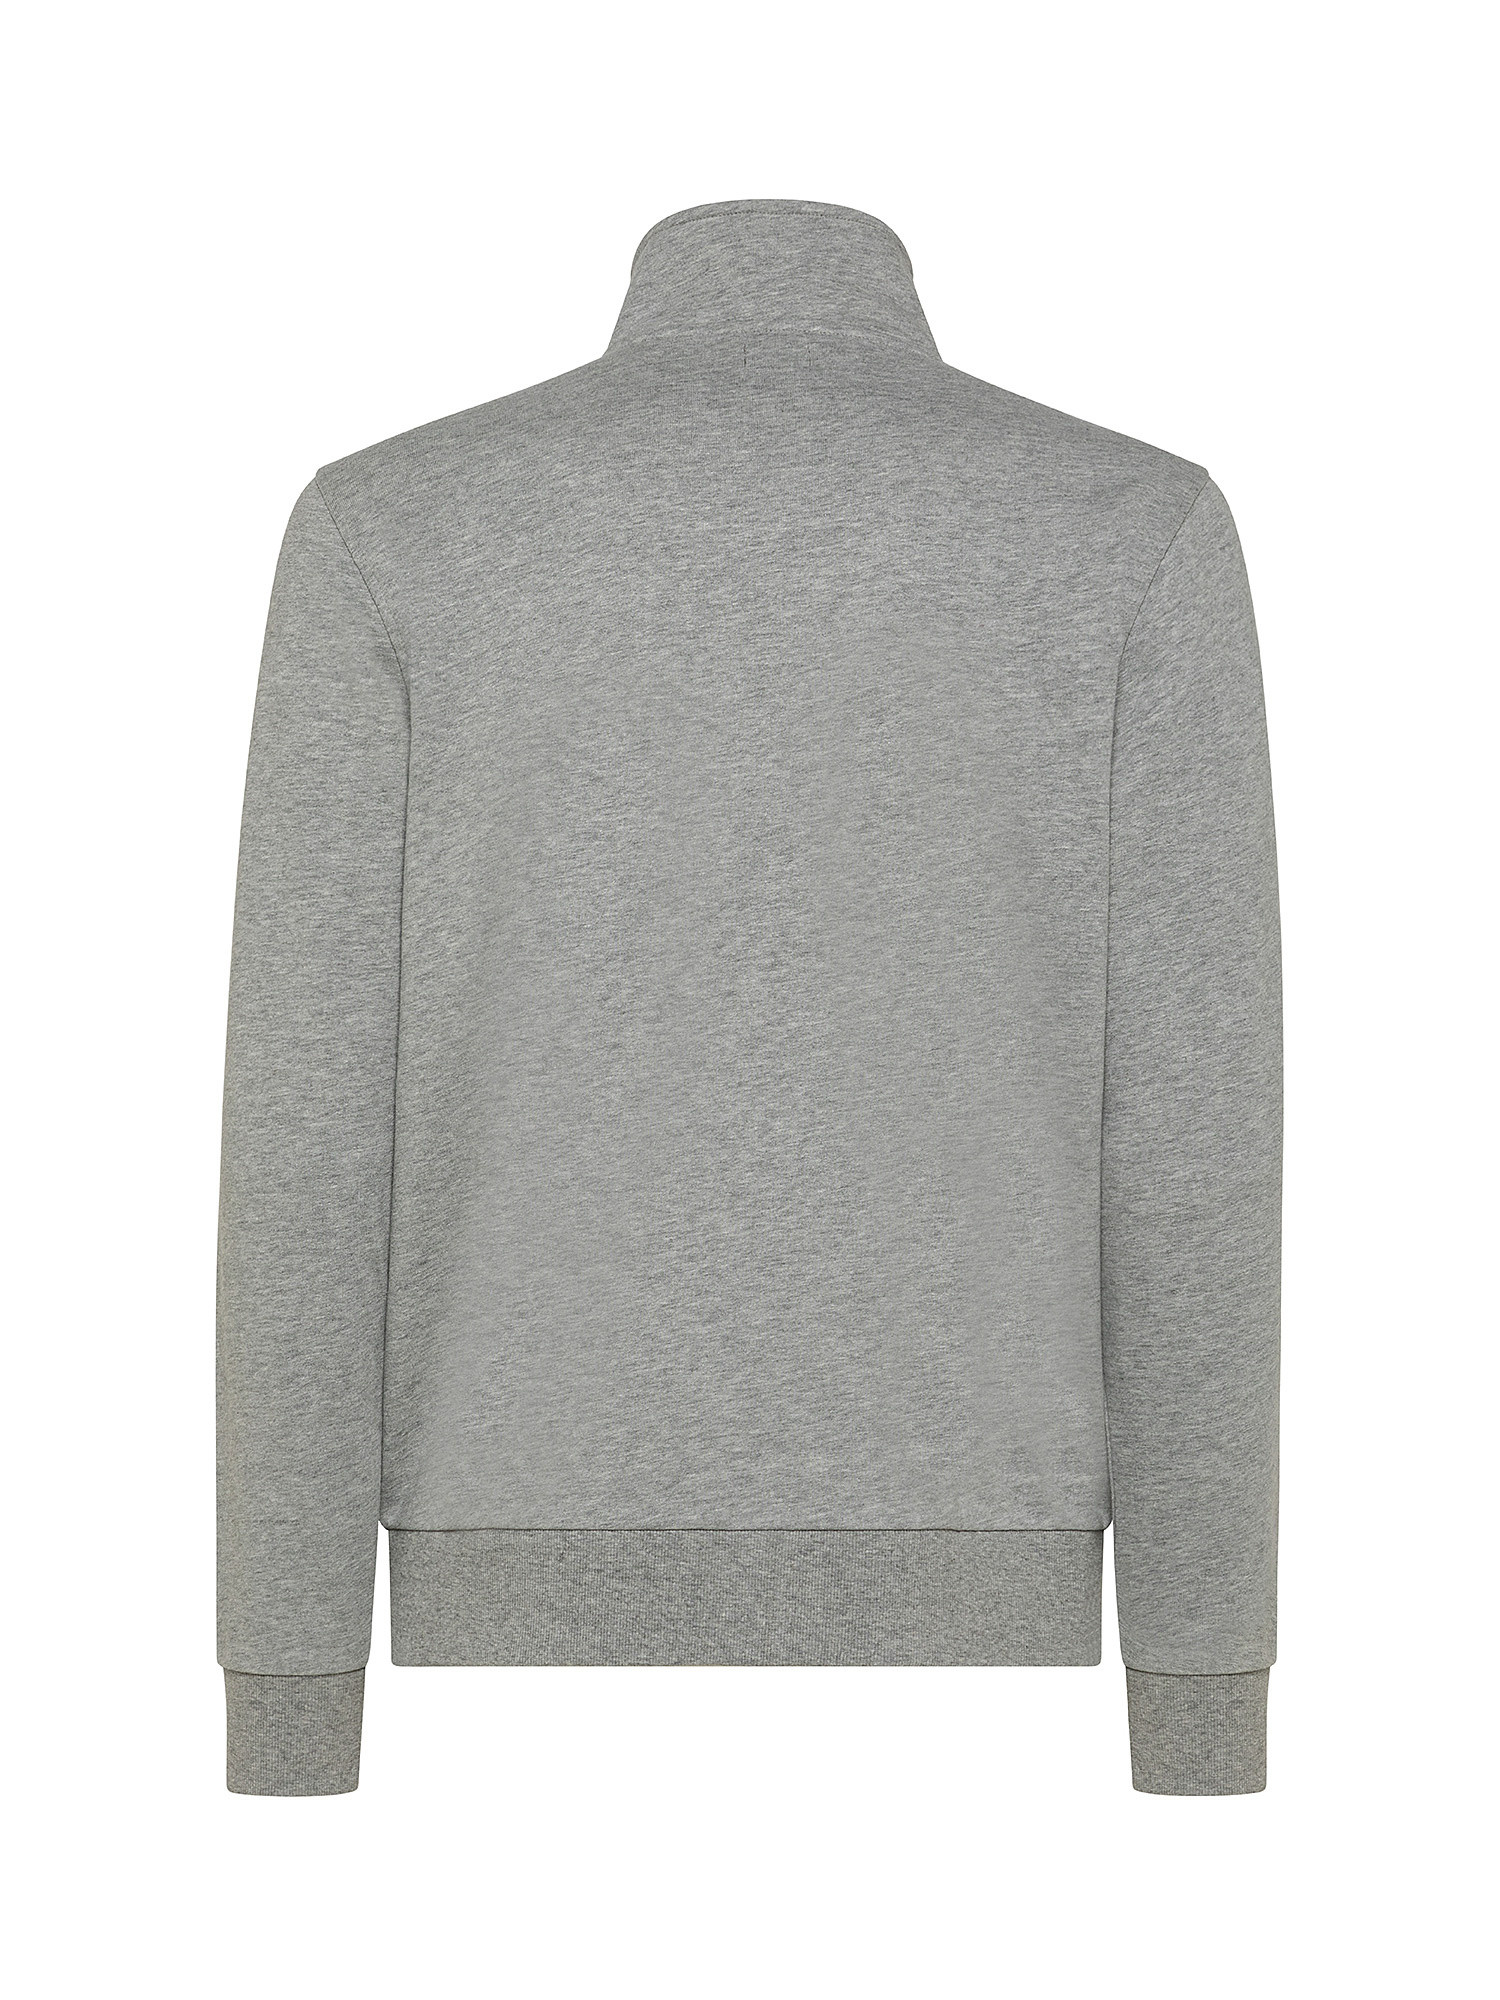 Sweatshirt with zip, Light Grey, large image number 1